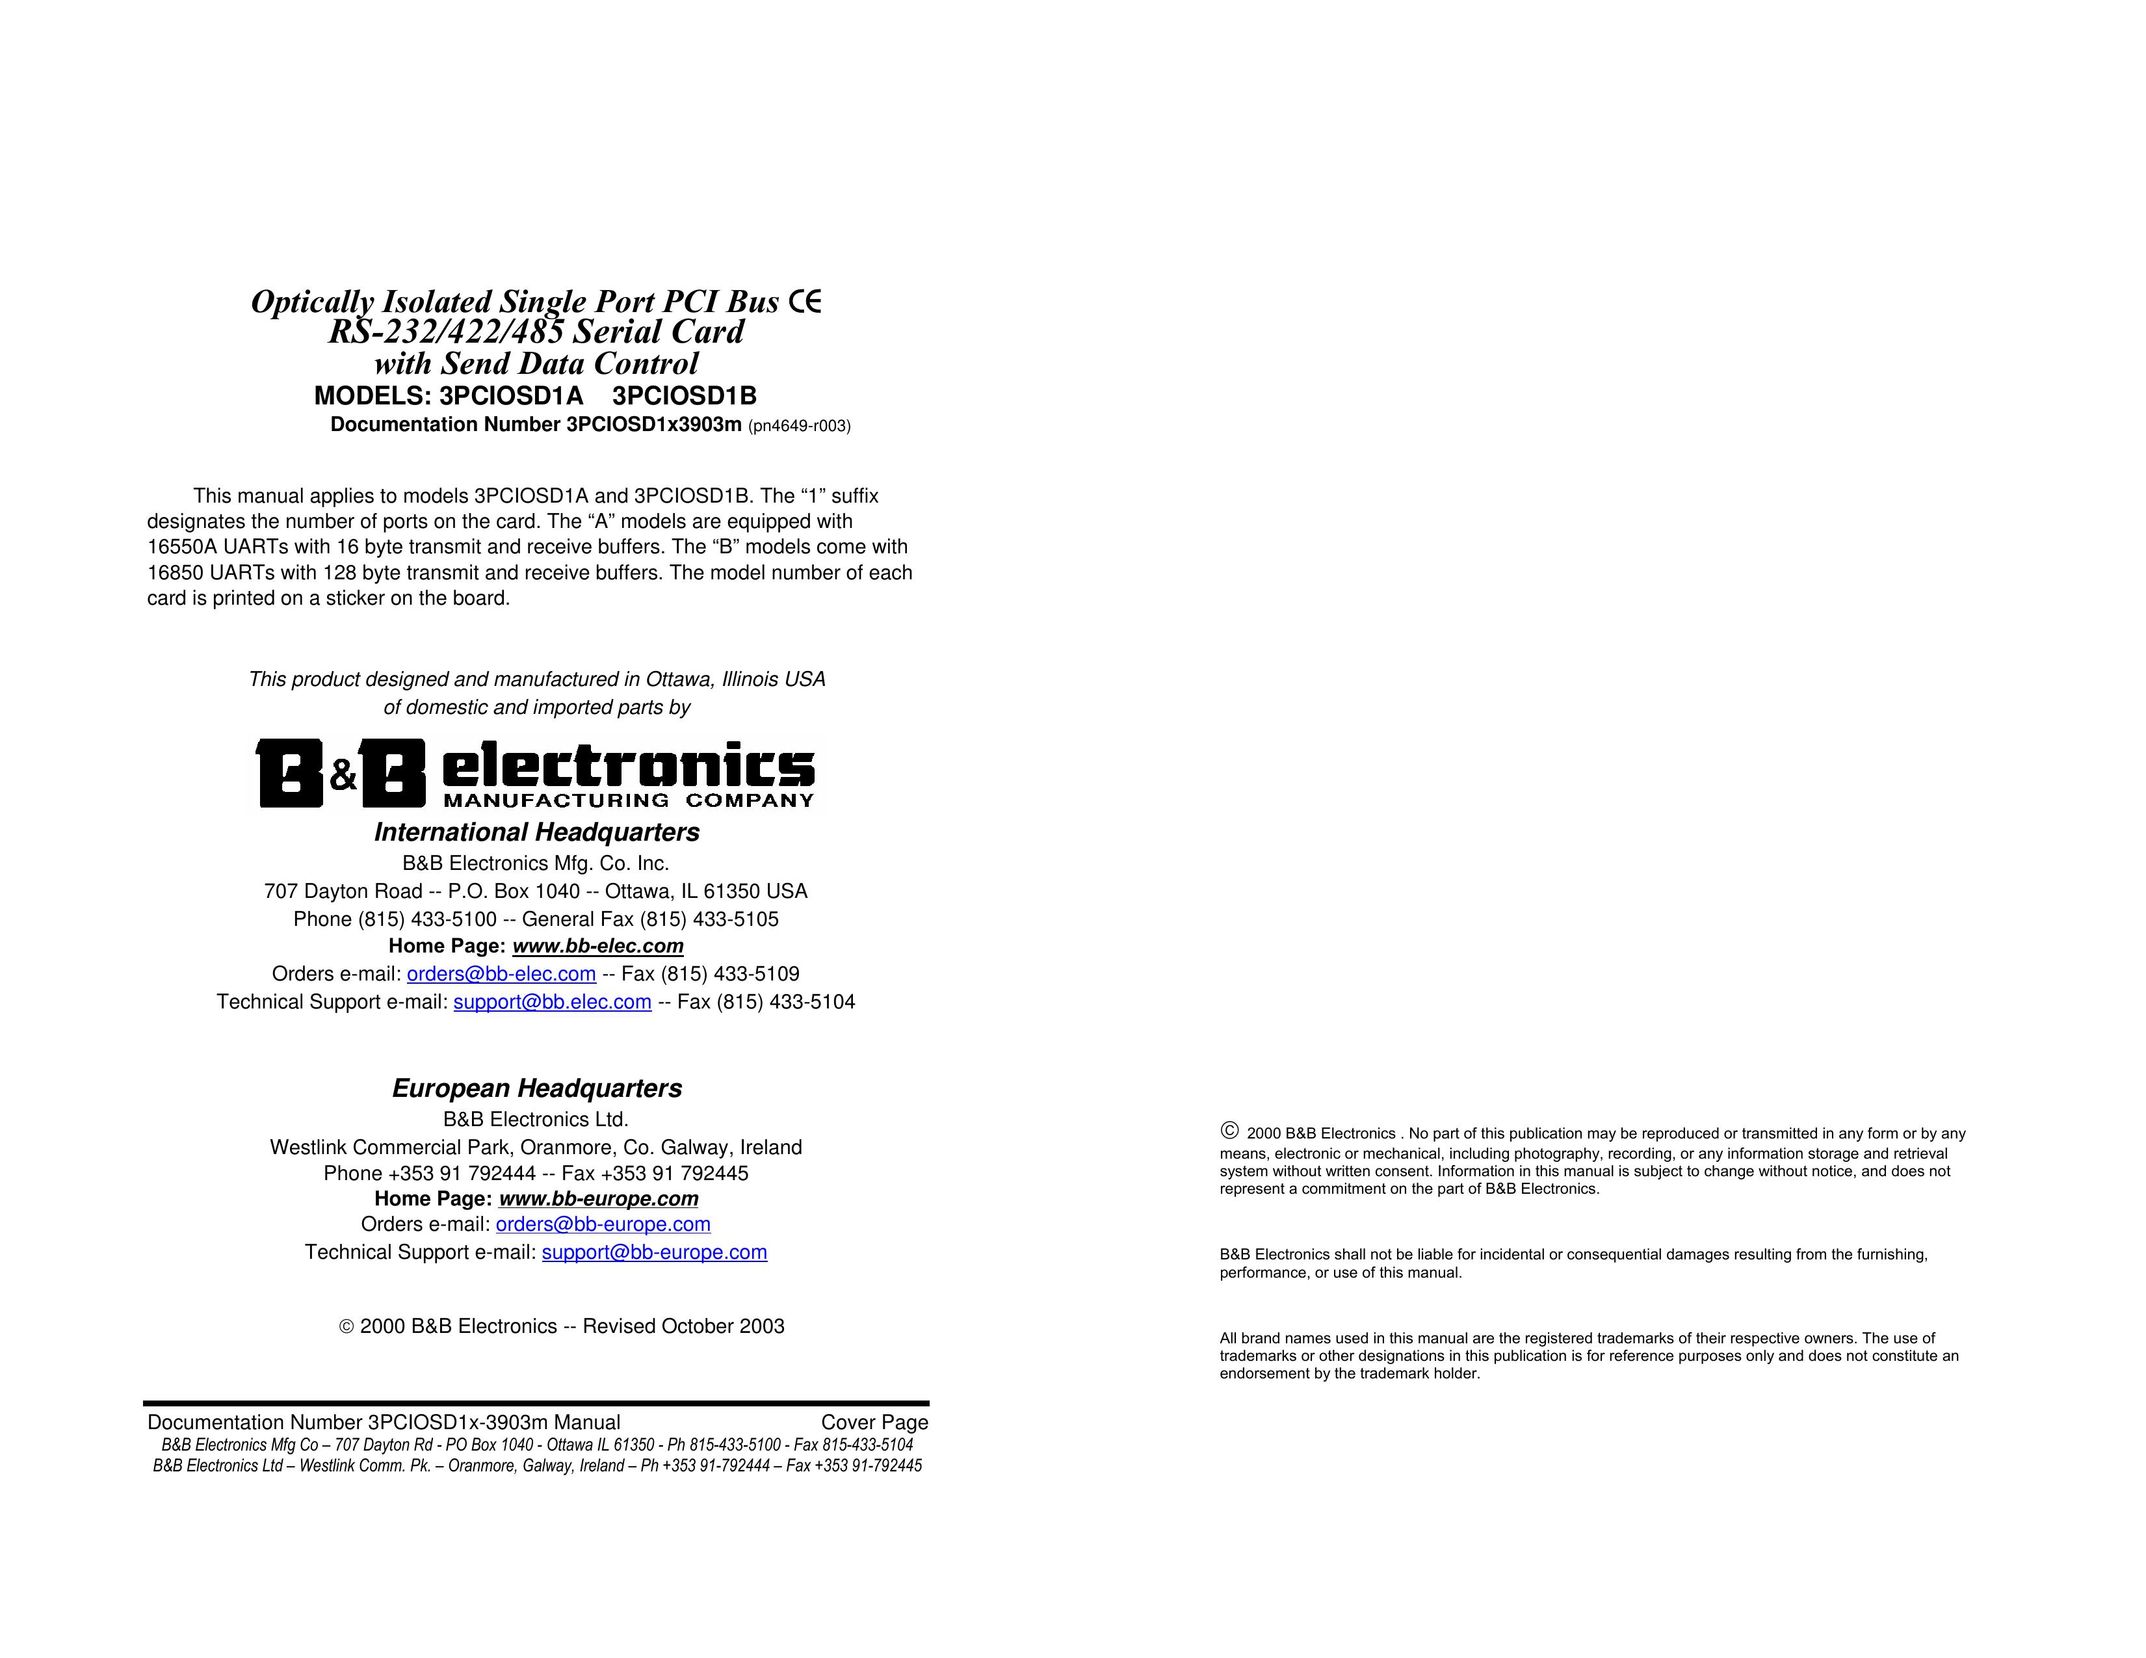 B&B Electronics Optically Isolated Single Port PCI Bus CE Computer Hardware User Manual